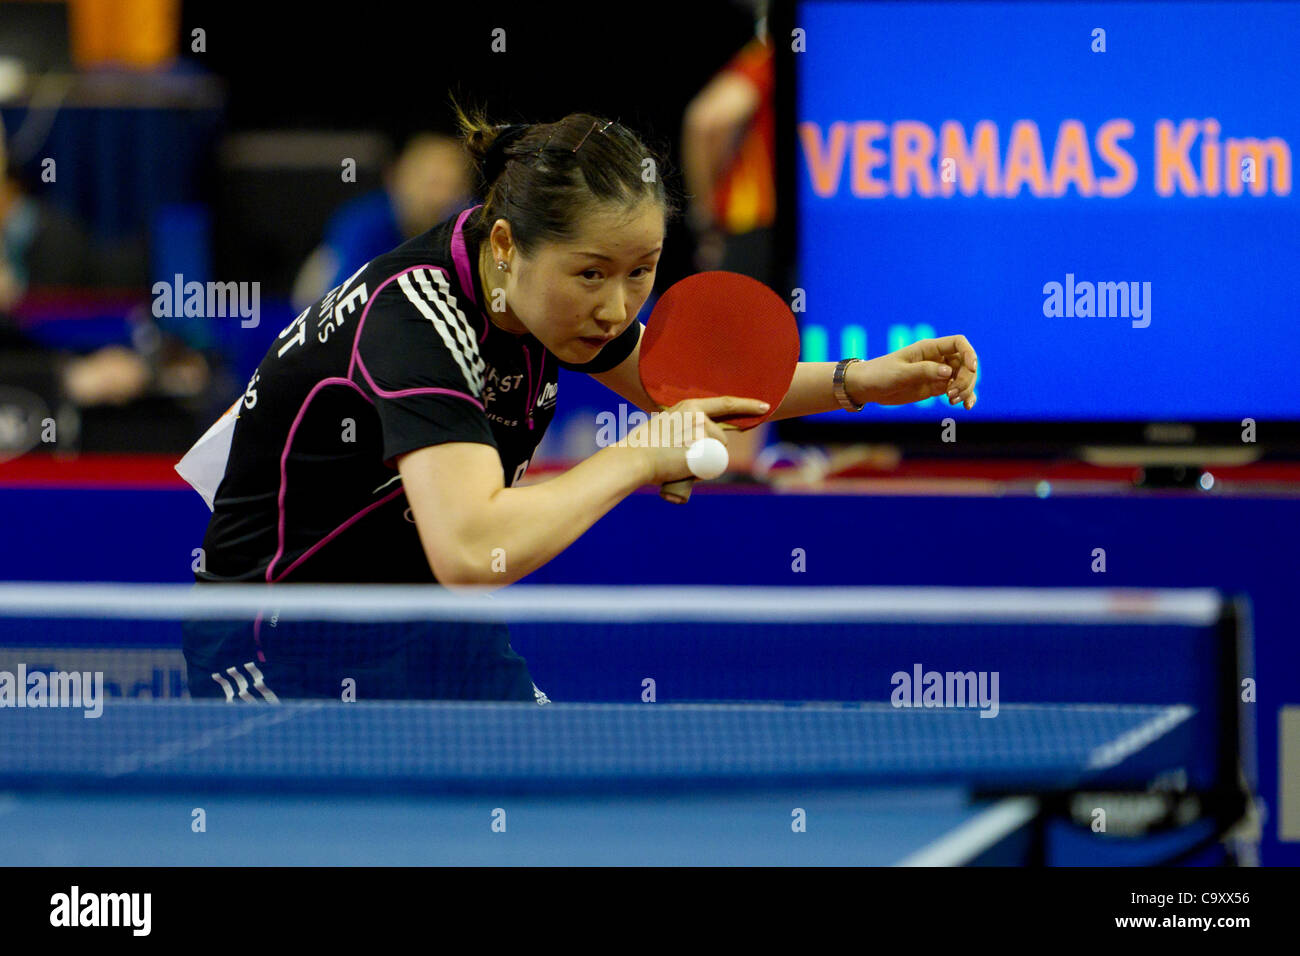 EINDHOVEN, Paesi Bassi, 03/03/2012. Ping-pong player Jie li (nella foto) vince la sua partita contro Kim Vermaas presso la Dutch table tennis Championships 2012 a Eindhoven. Foto Stock